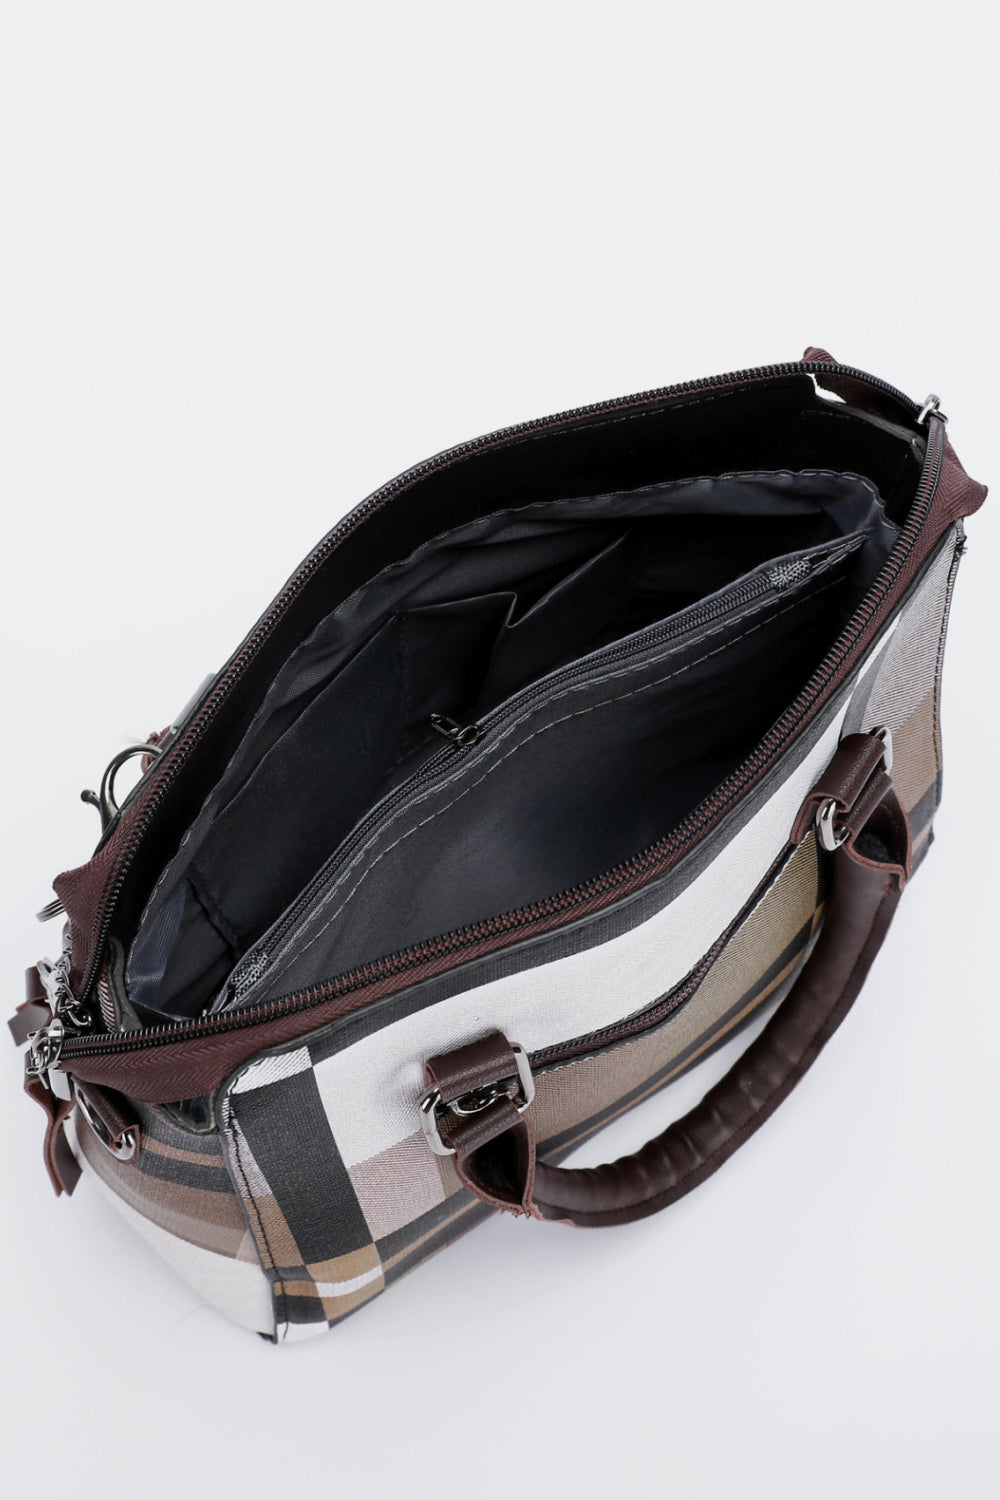 Lavender 4-Piece Color Block PU Leather Bag Set Handbags